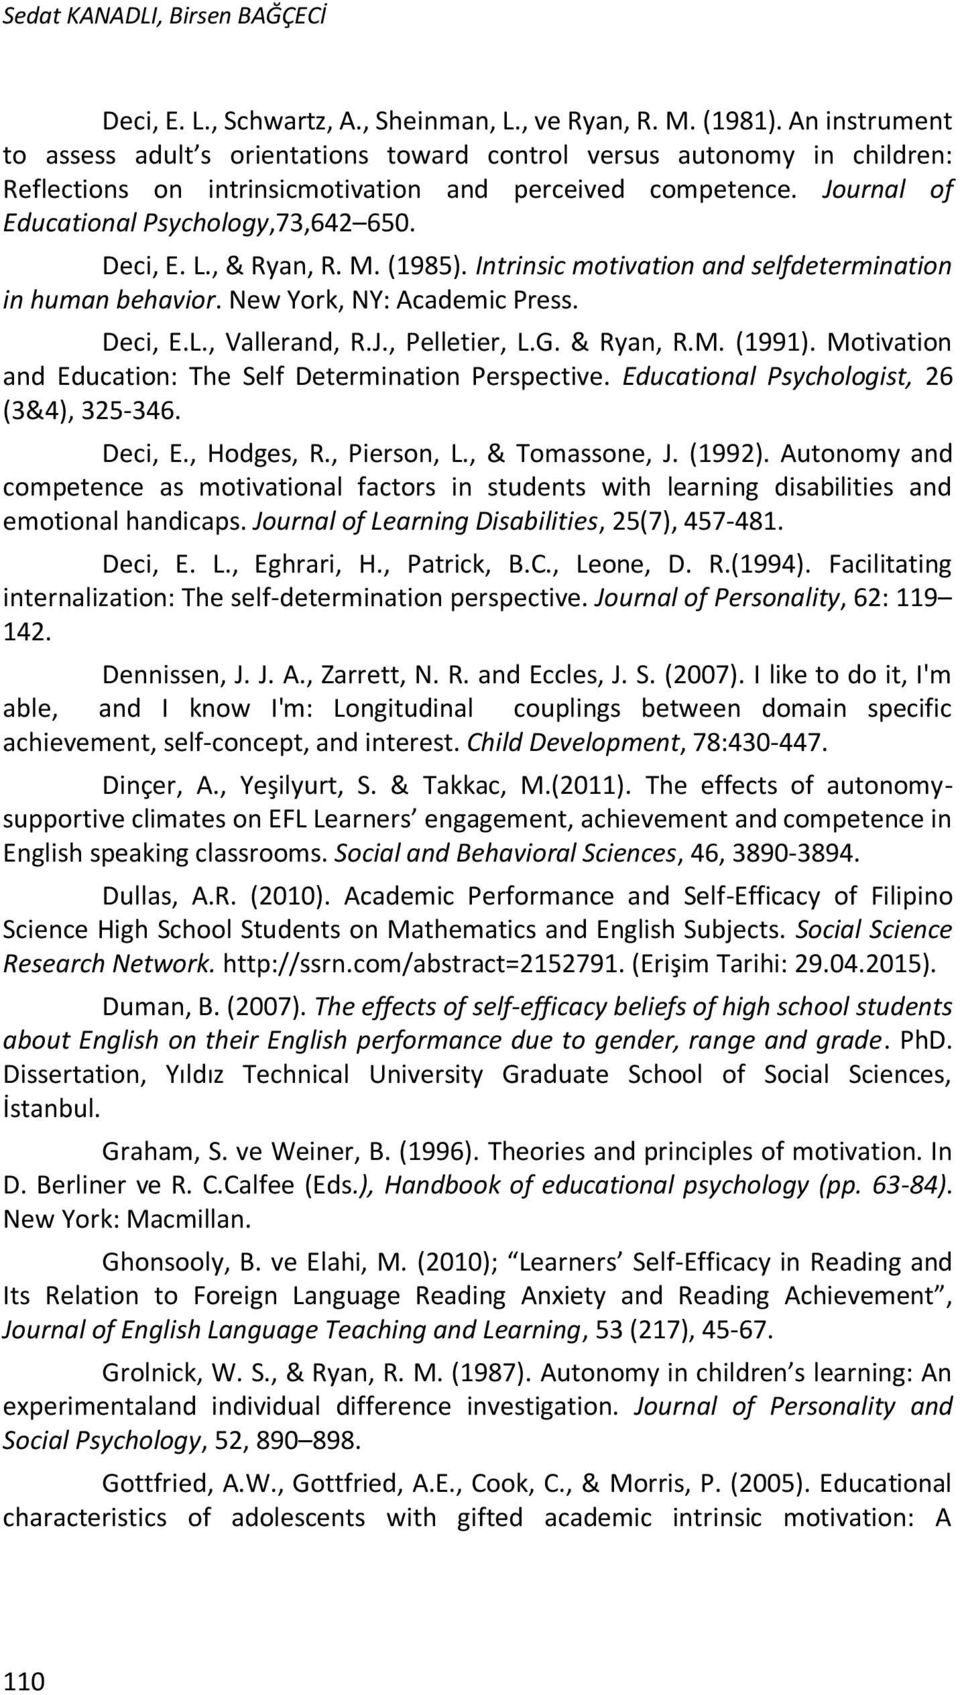 Deci, E. L., & Ryan, R. M. (1985). Intrinsic motivation and selfdetermination in human behavior. New York, NY: Academic Press. Deci, E.L., Vallerand, R.J., Pelletier, L.G. & Ryan, R.M. (1991).